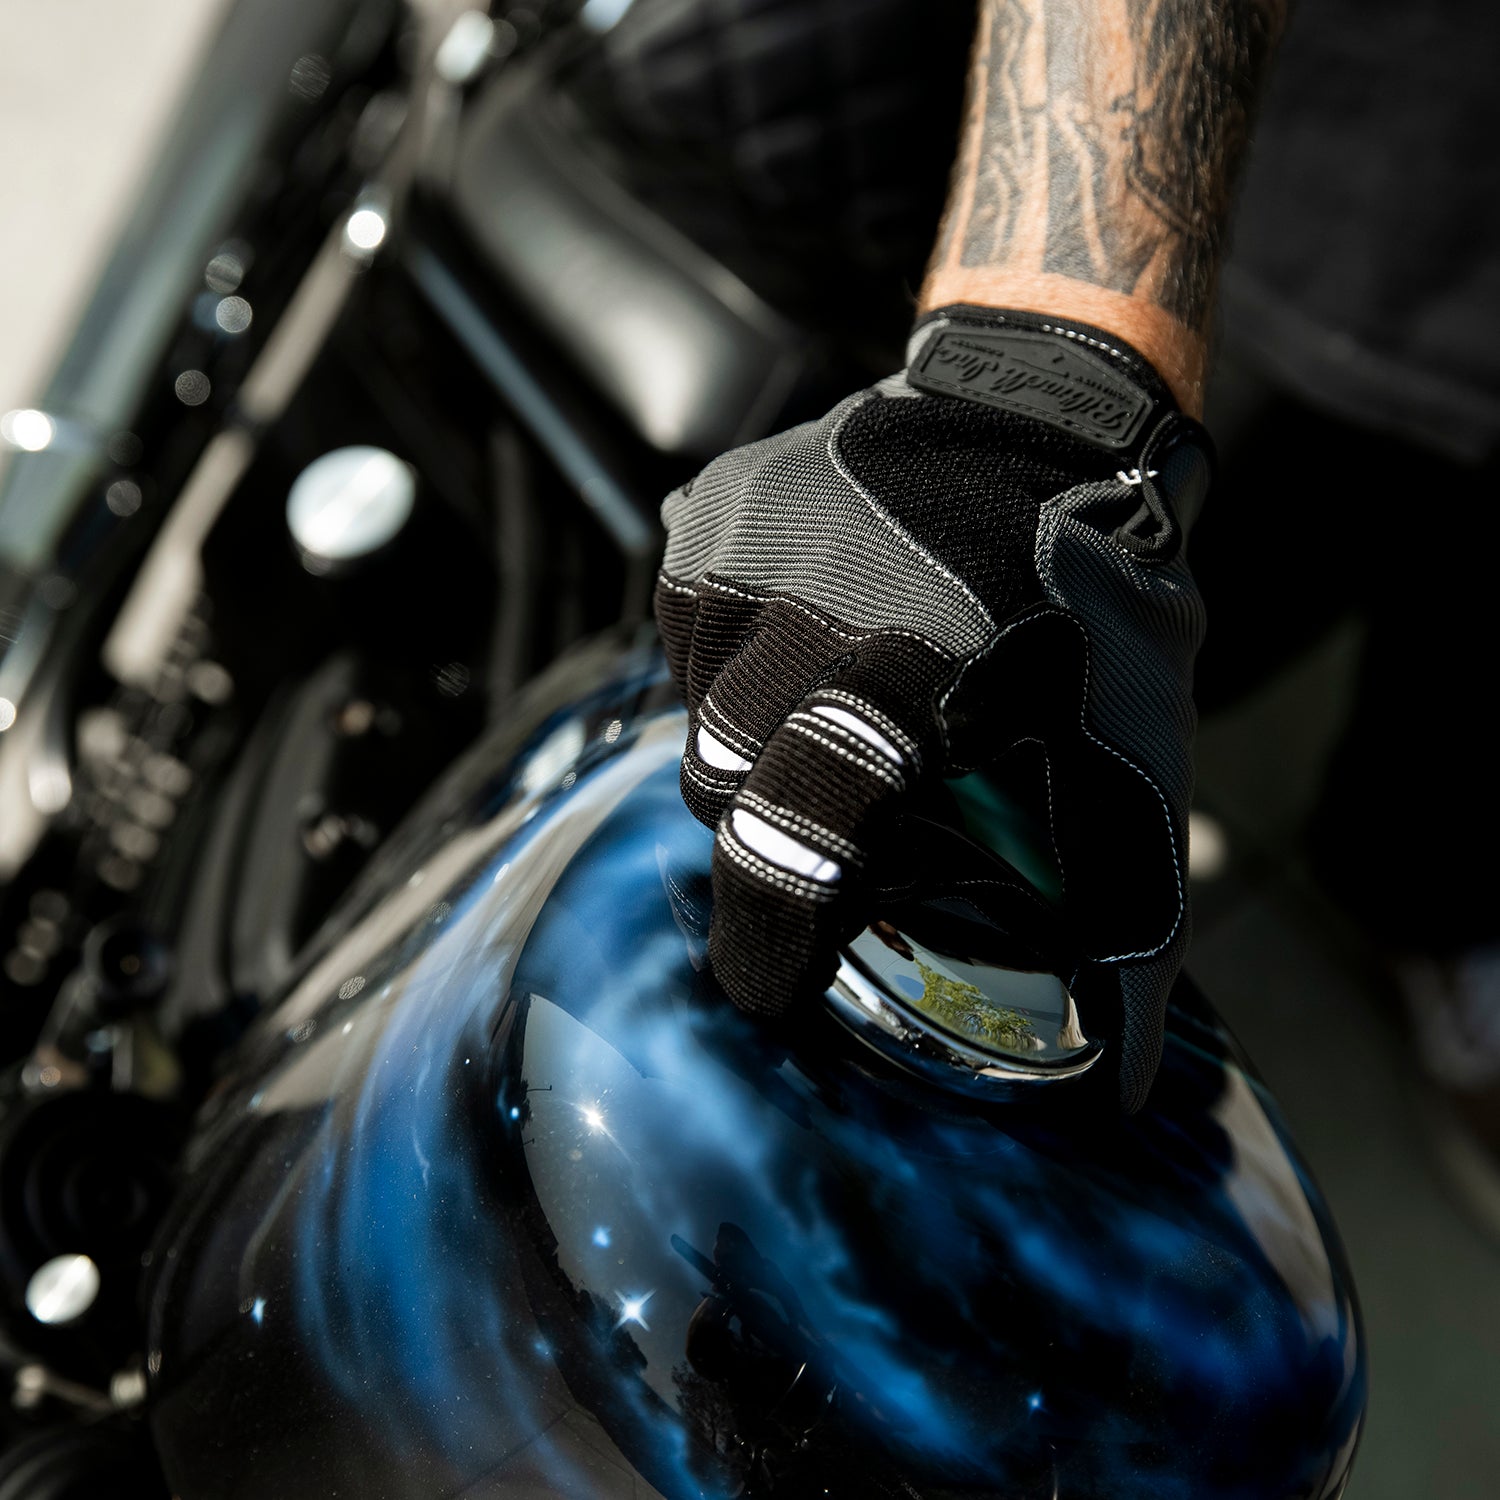 Moto Gloves - Grey/Black